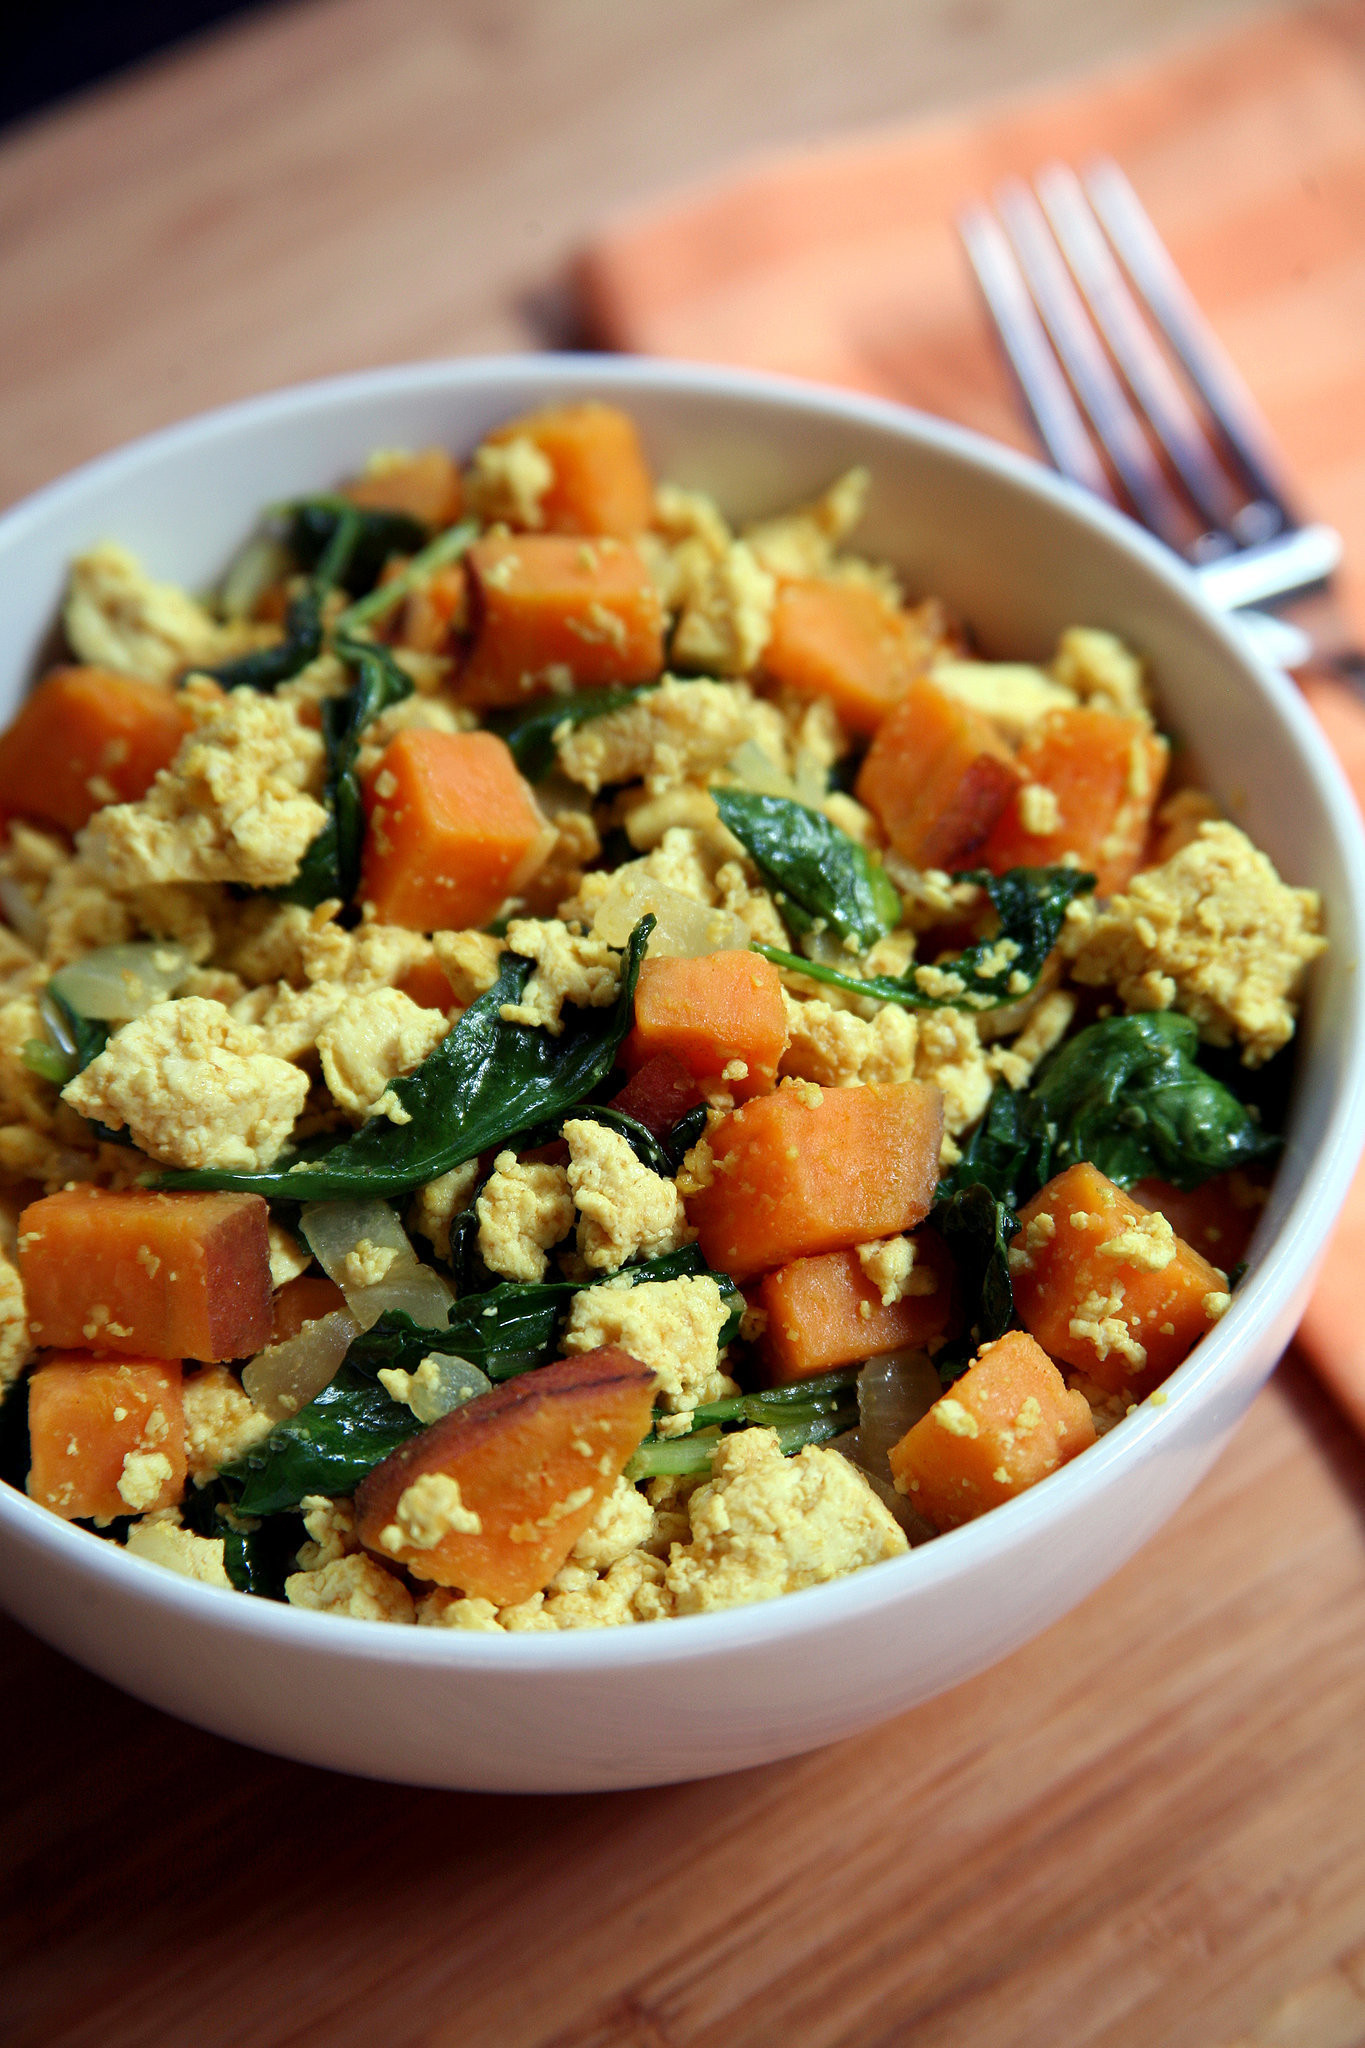 Recipes With Tofu
 Vegan Breakfast Recipes Tofu Kale Sweet Potato Scramble